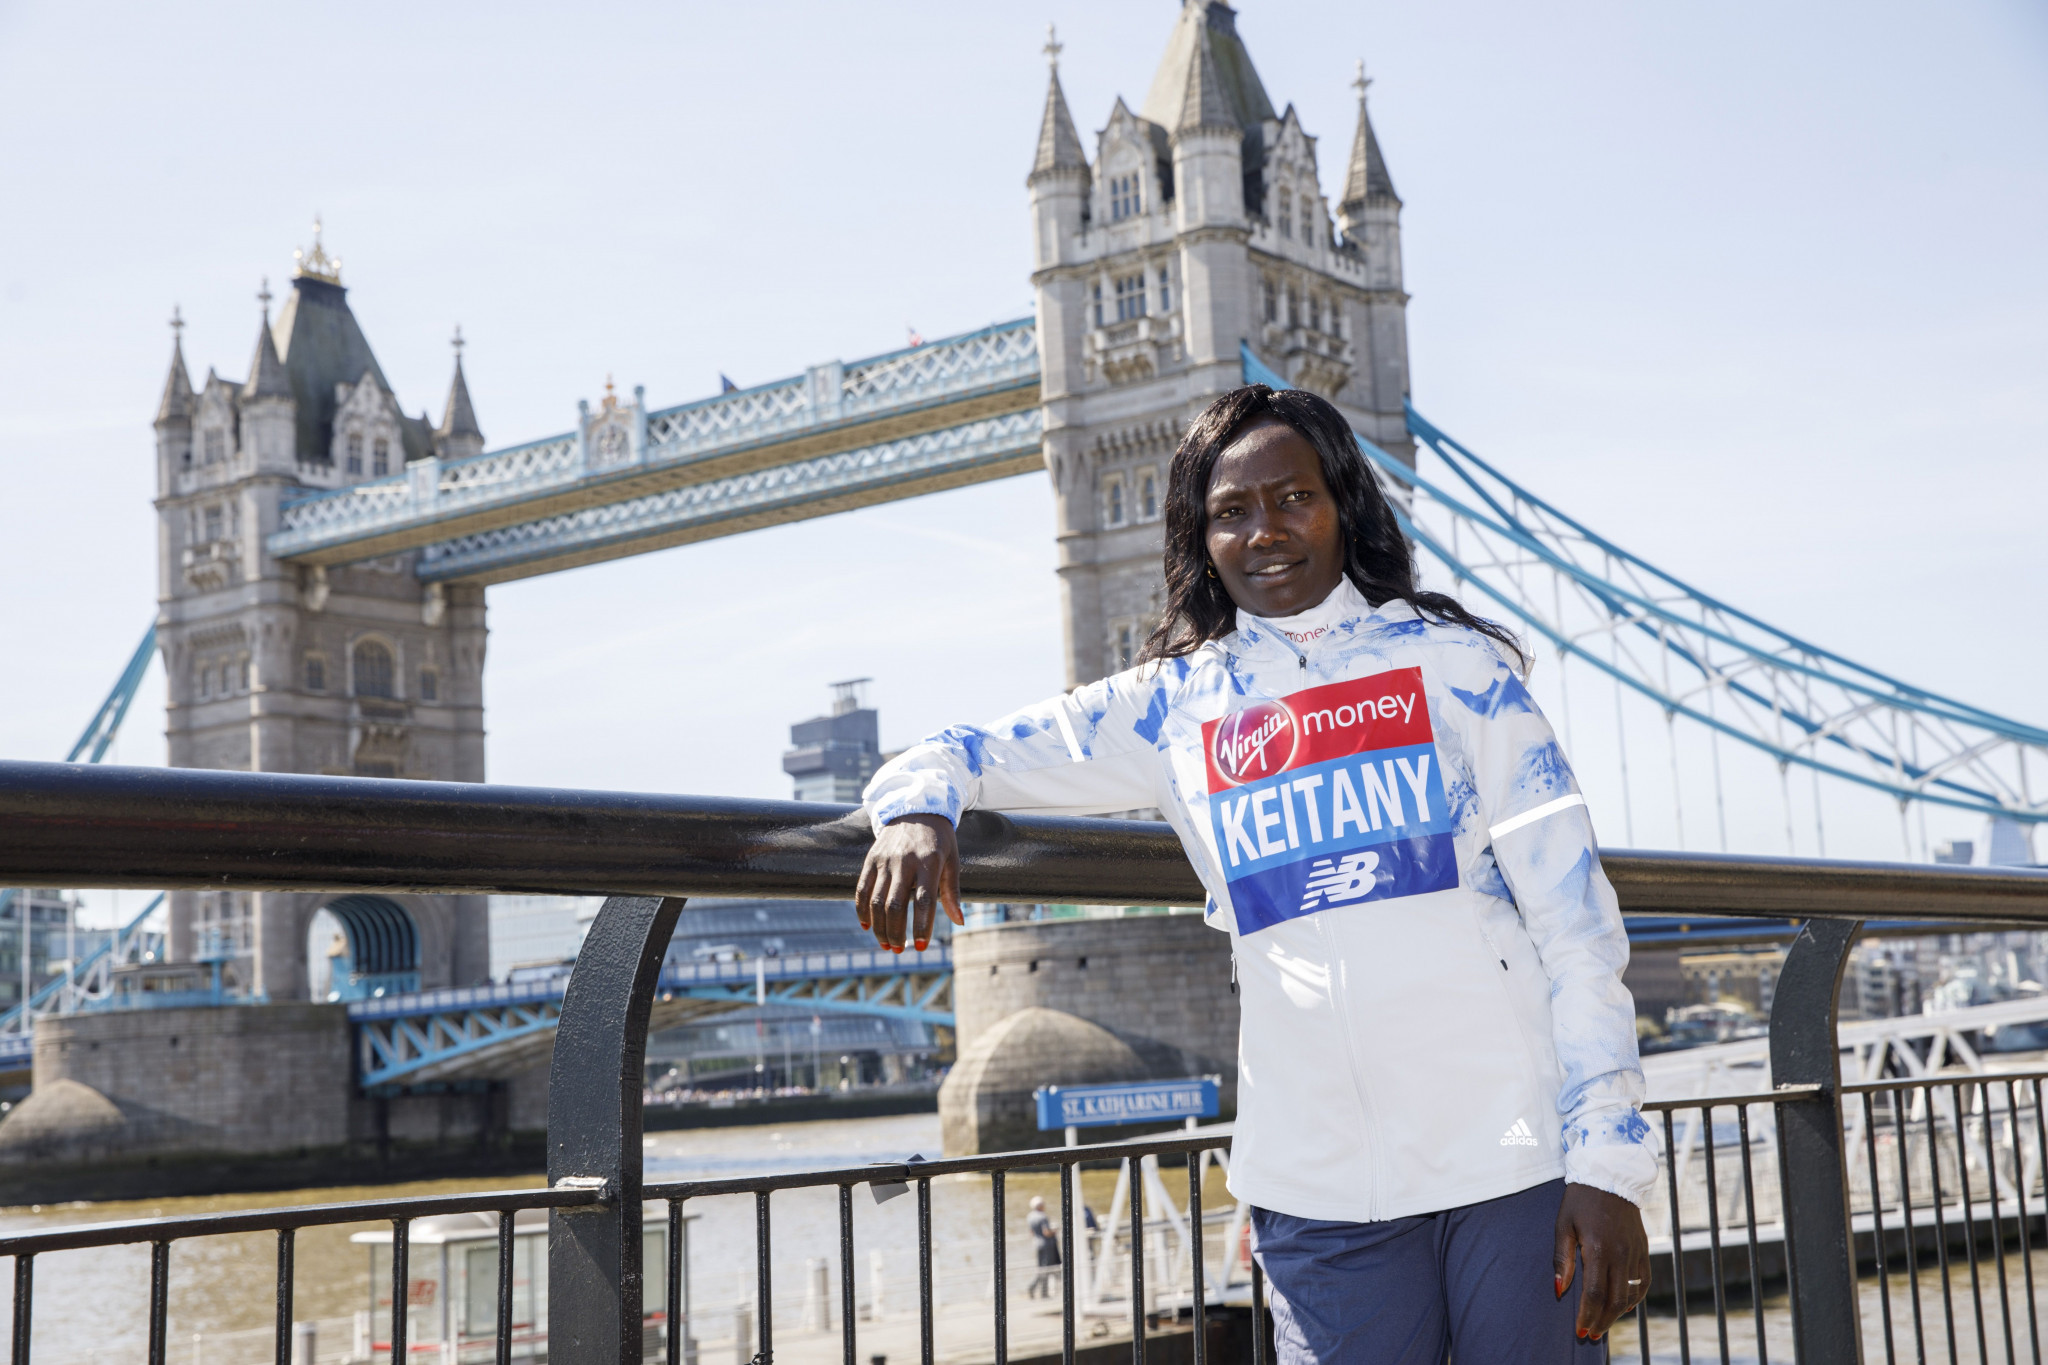 Defending Virgin London Marathon champion Mary Keitany of Kenya is targeting breaking Paula Radcliffe's longstanding world record ©Getty Images